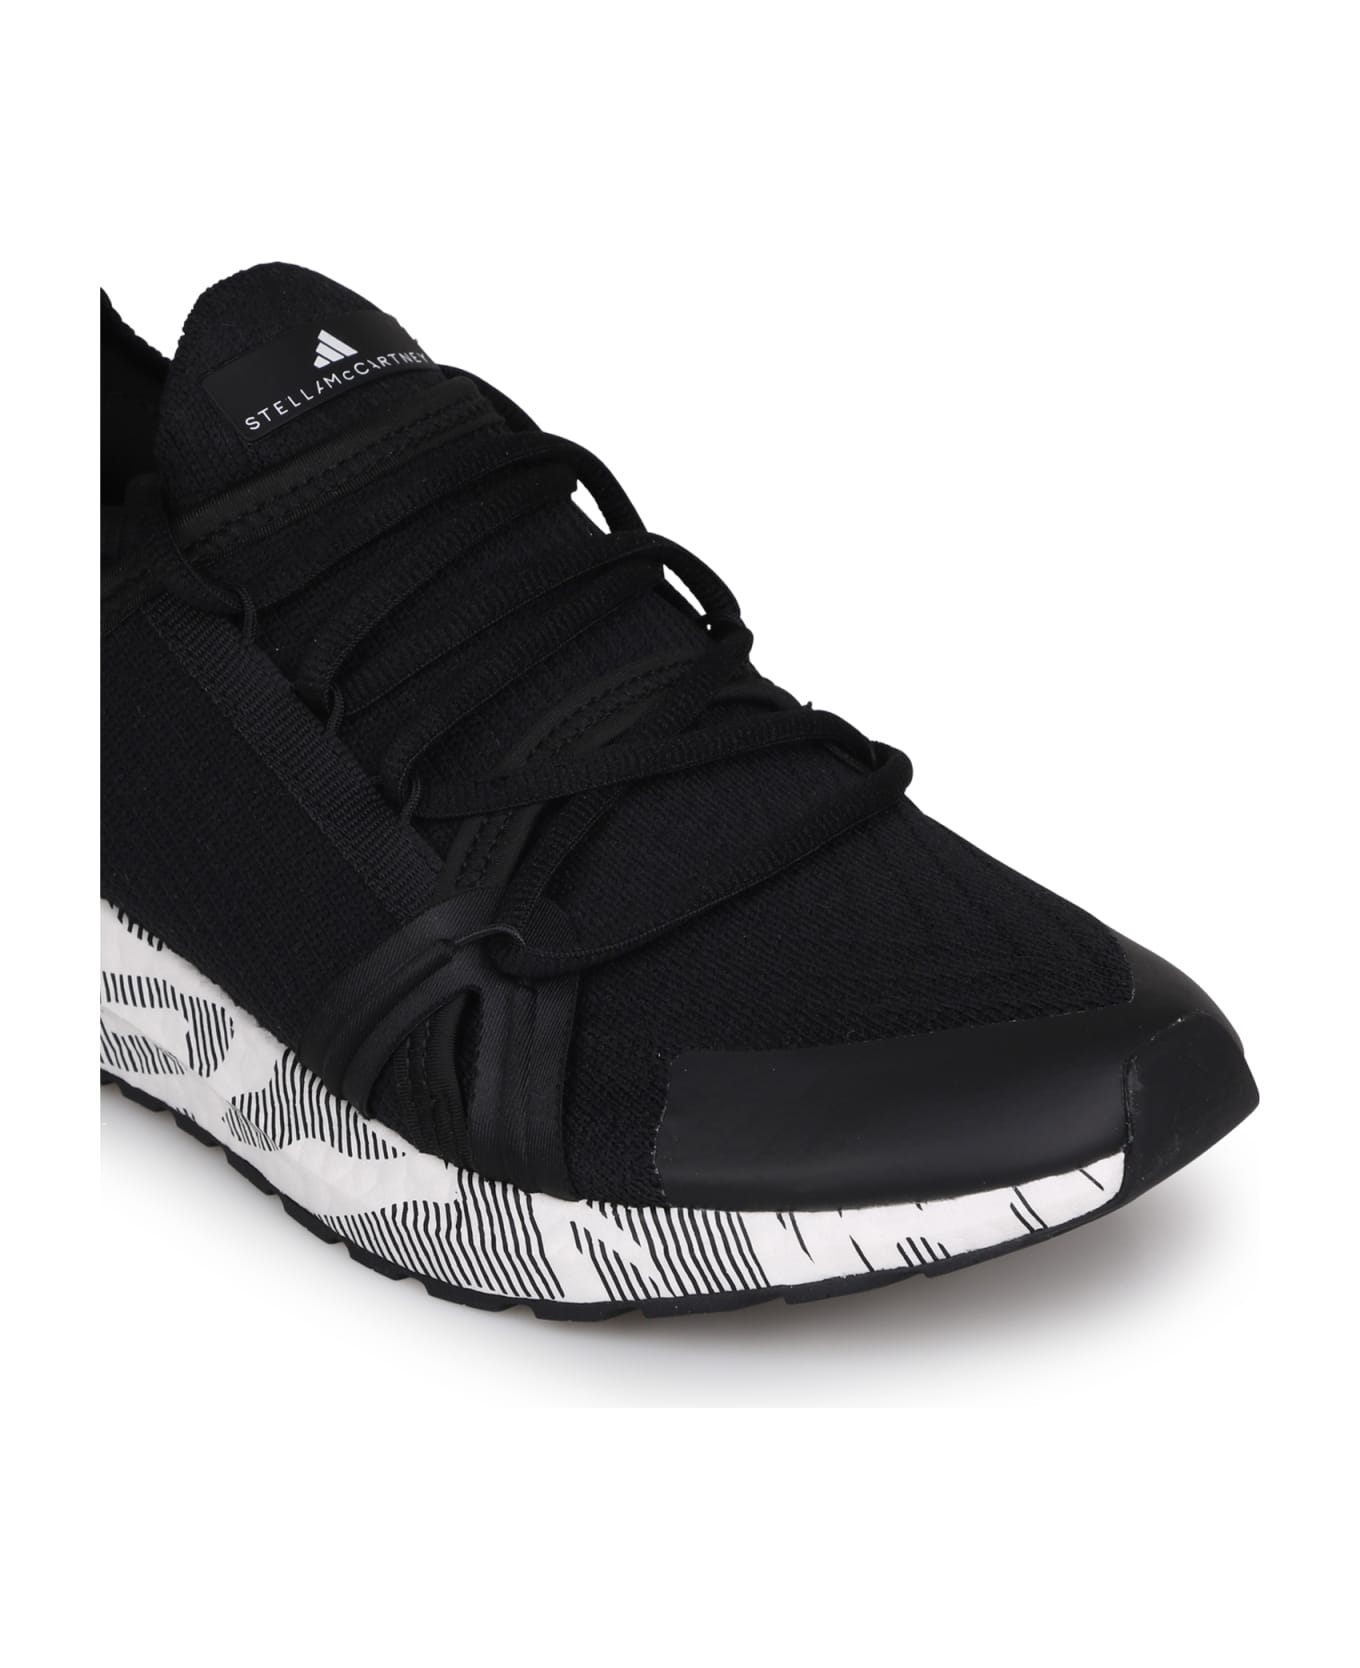 Adidas by Stella McCartney Ultraboost 20 Low-top Sneakers スニーカー